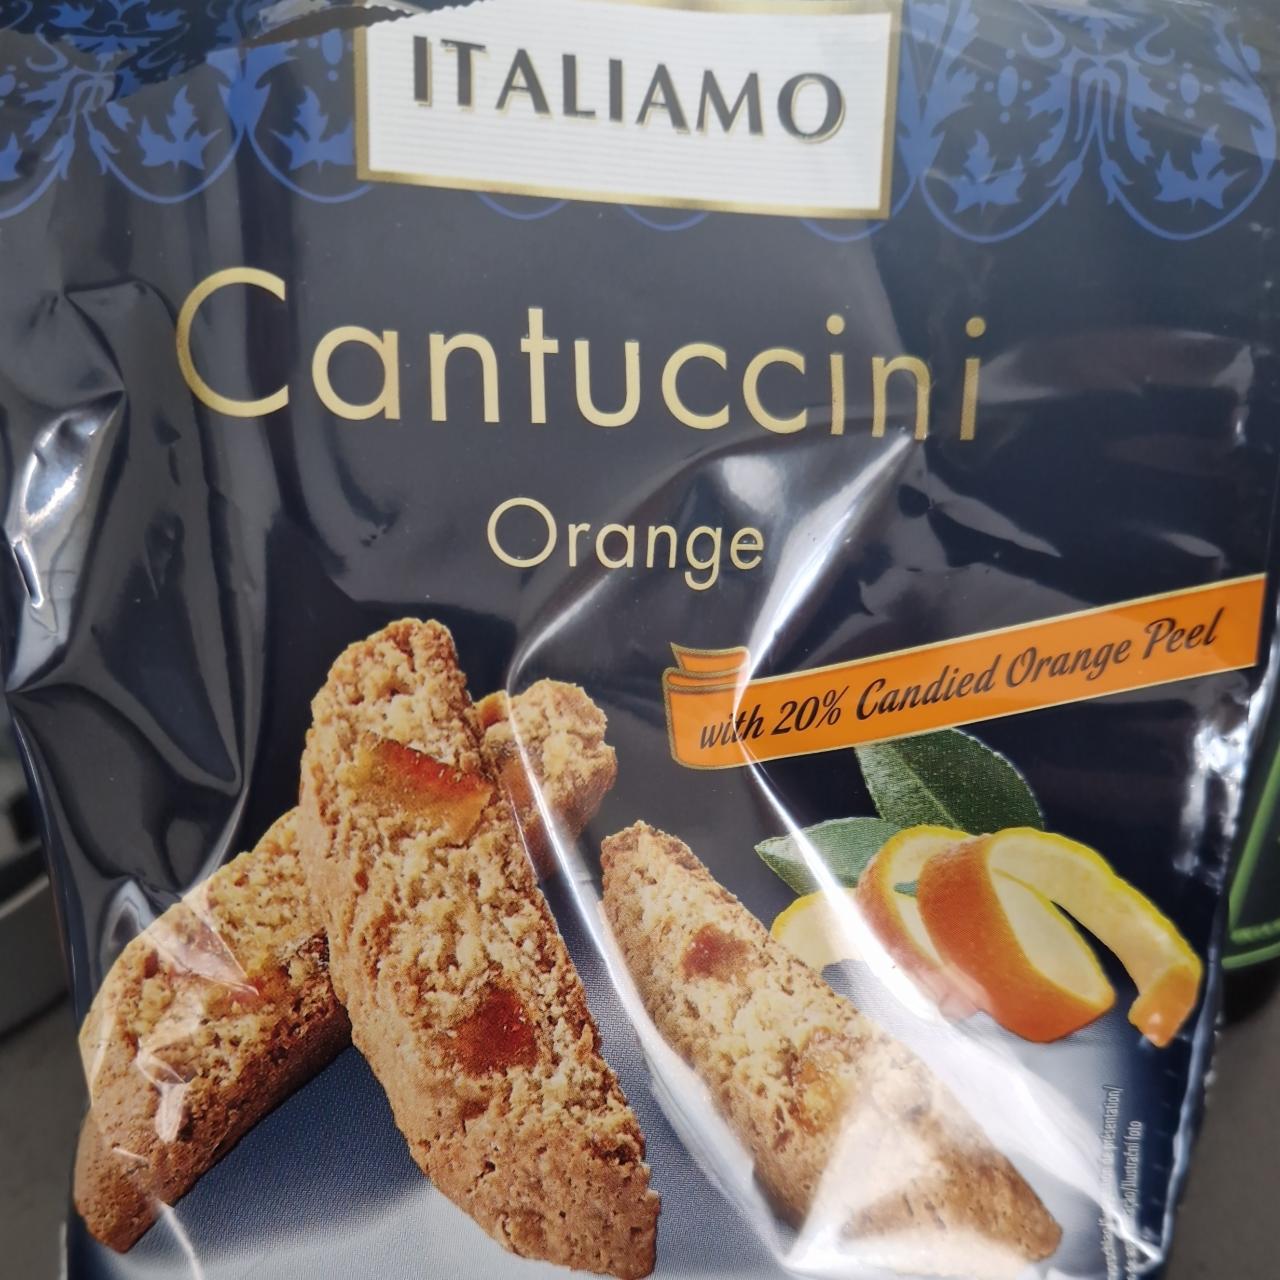 Fotografie - Cantuccini Orange Italiamo